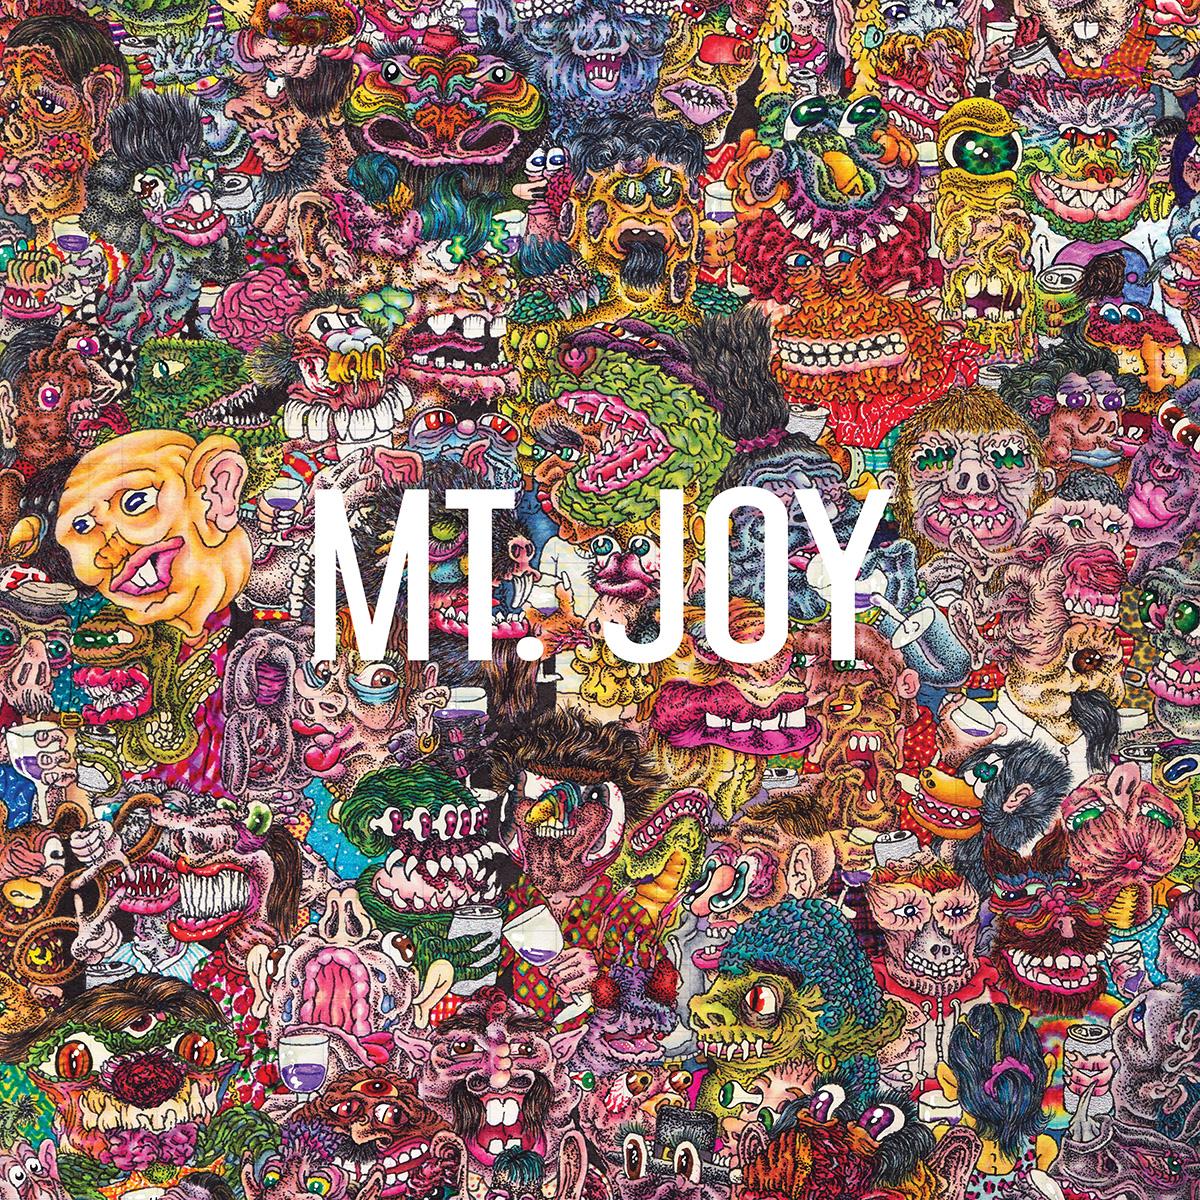 Mt. Joy Releases Self-Titled Debut Album 